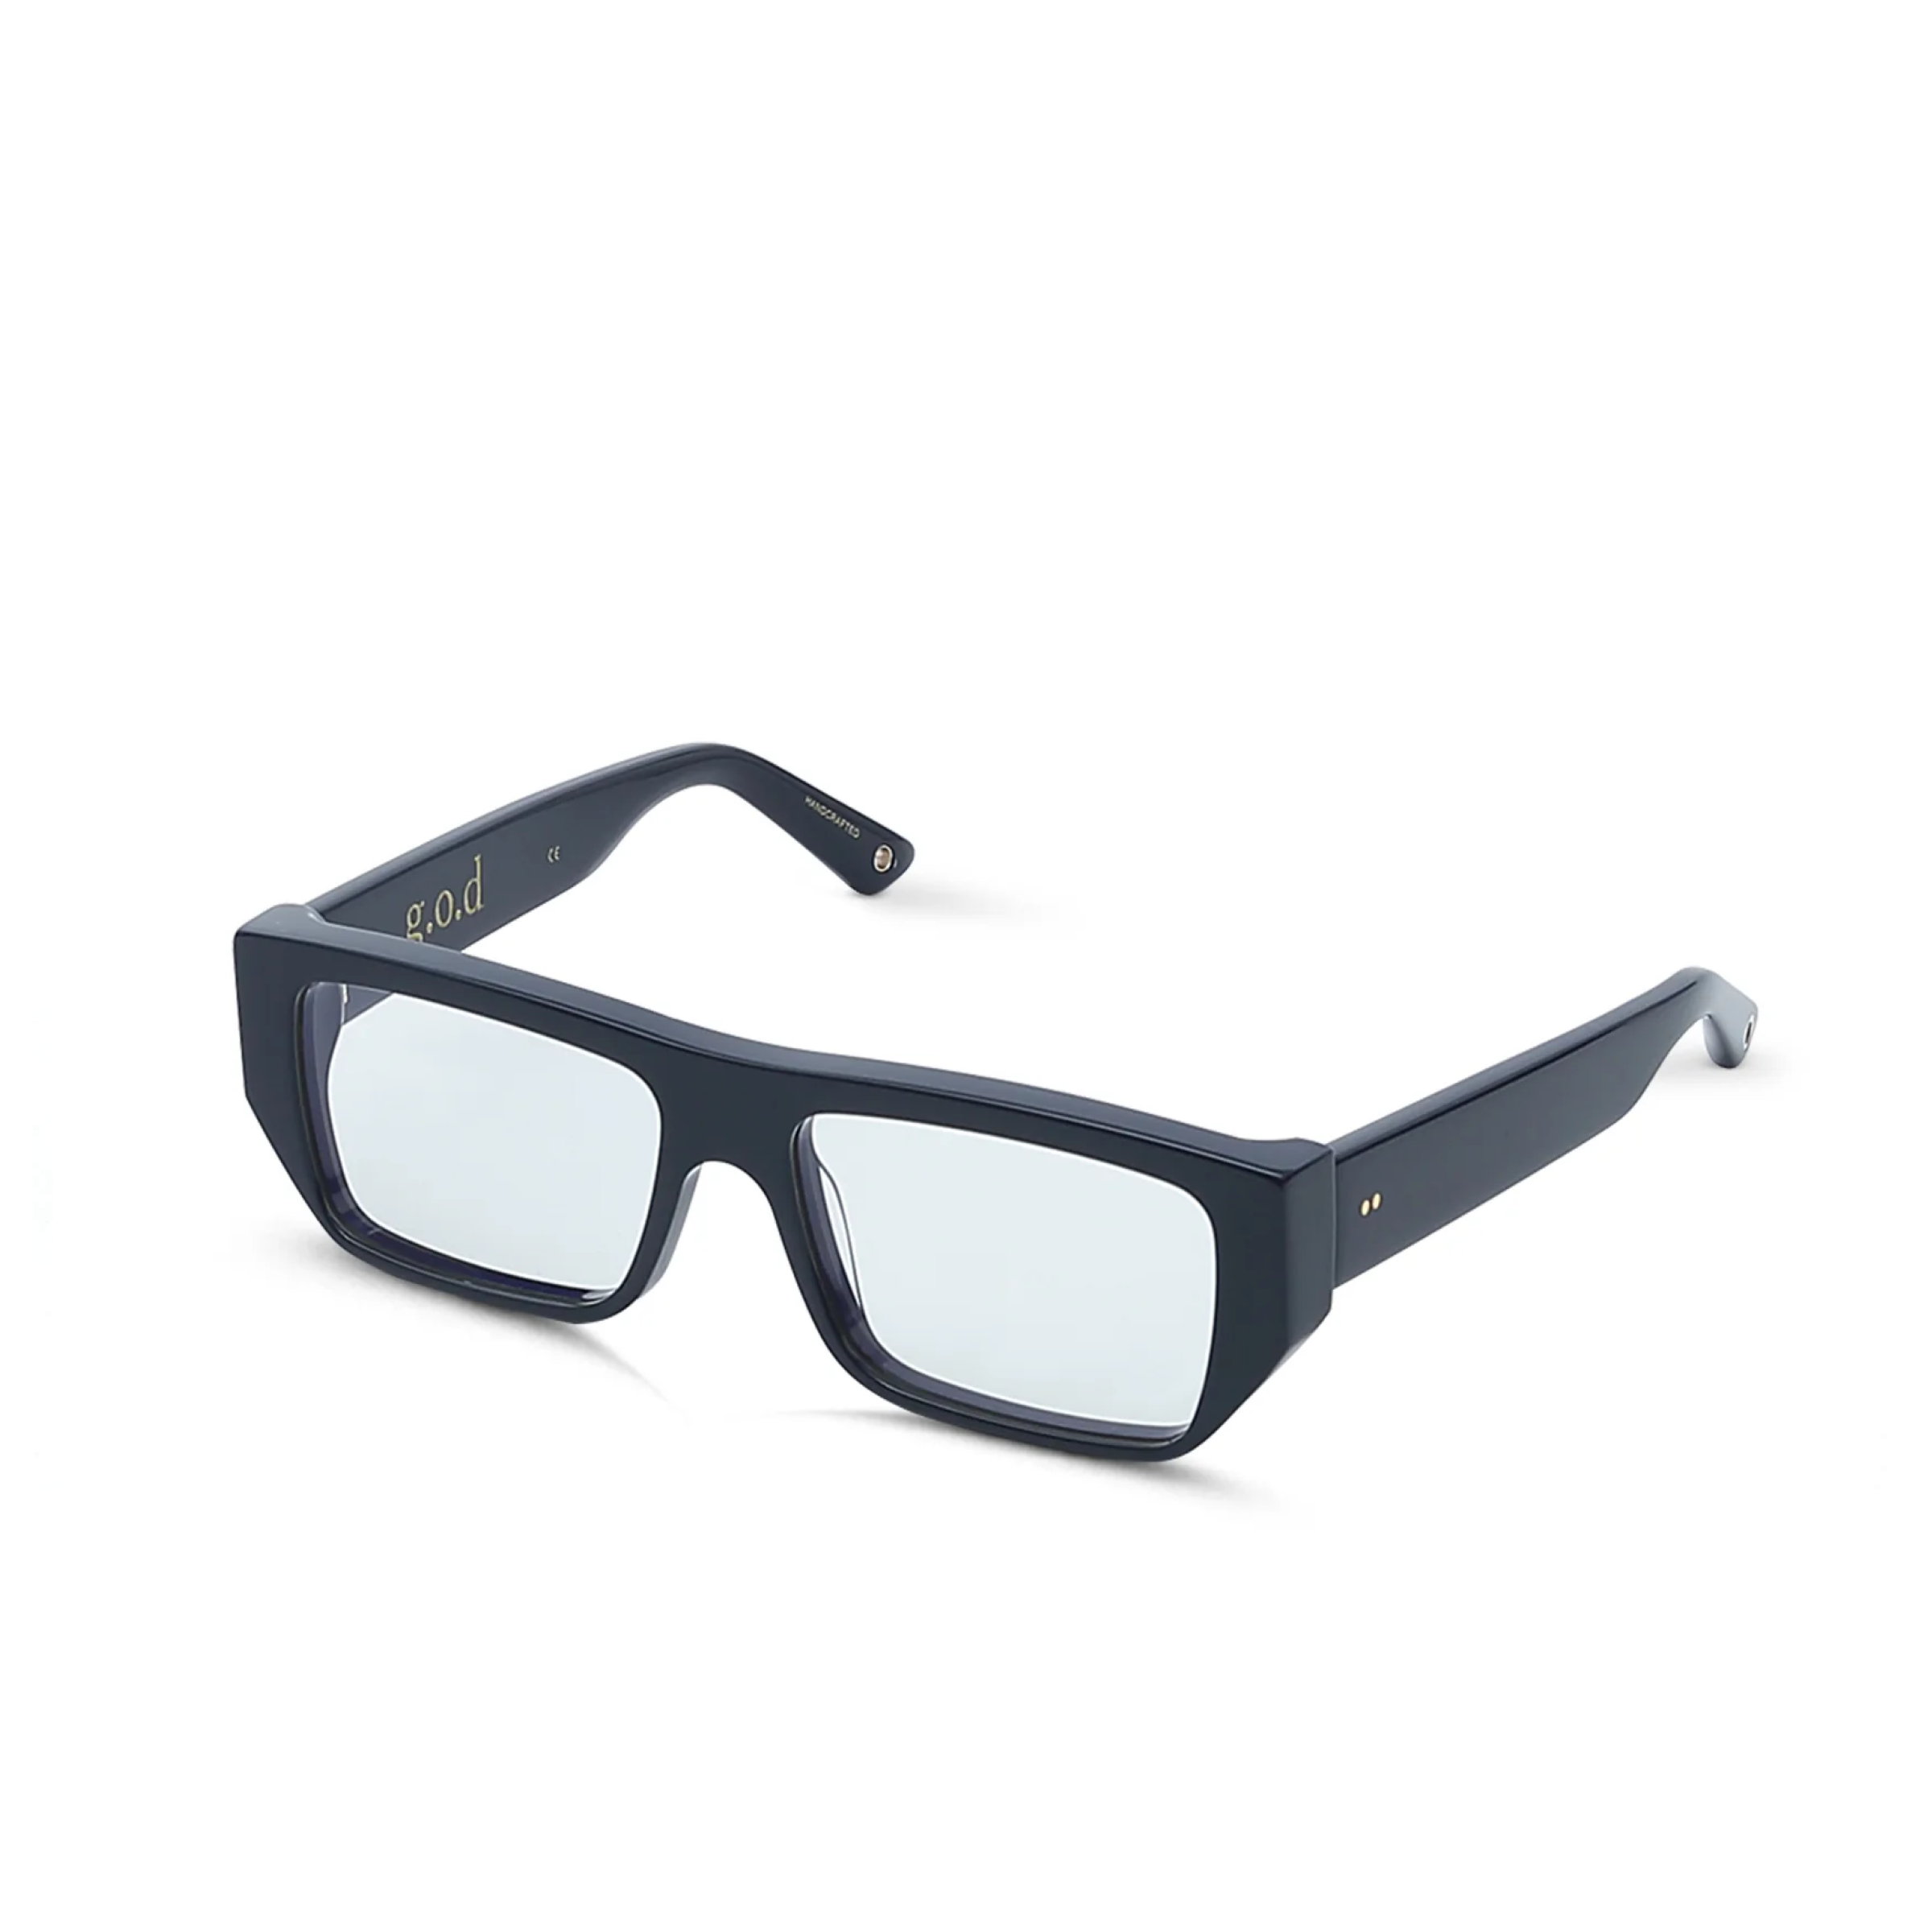 Twenty Four L Sunglasses with Dark Grey Lens in Navy